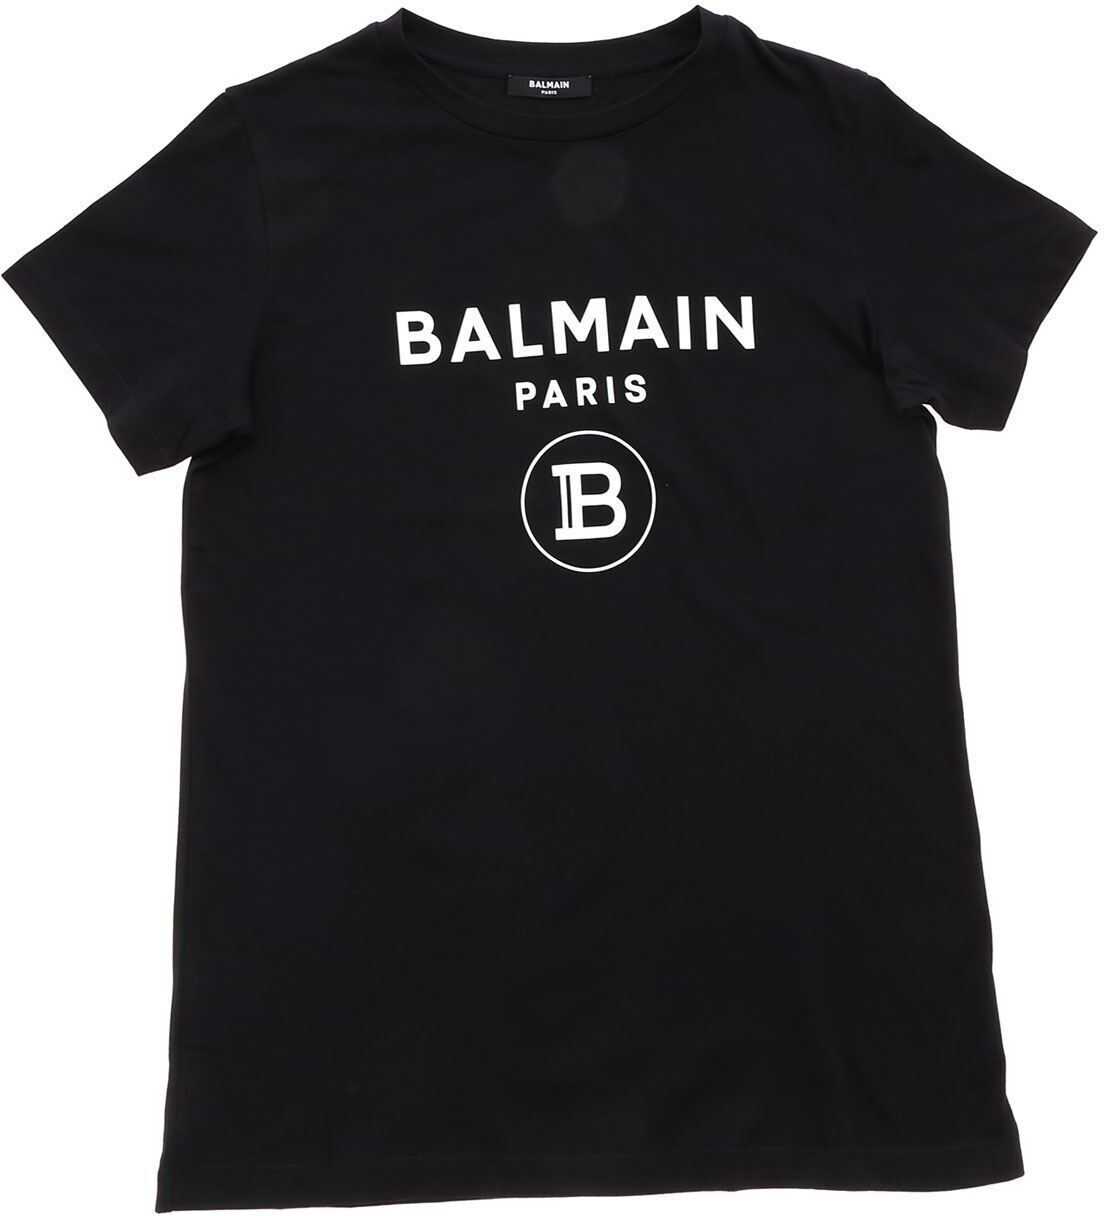 Balmain T-Shirt In Black With White Logo* Black